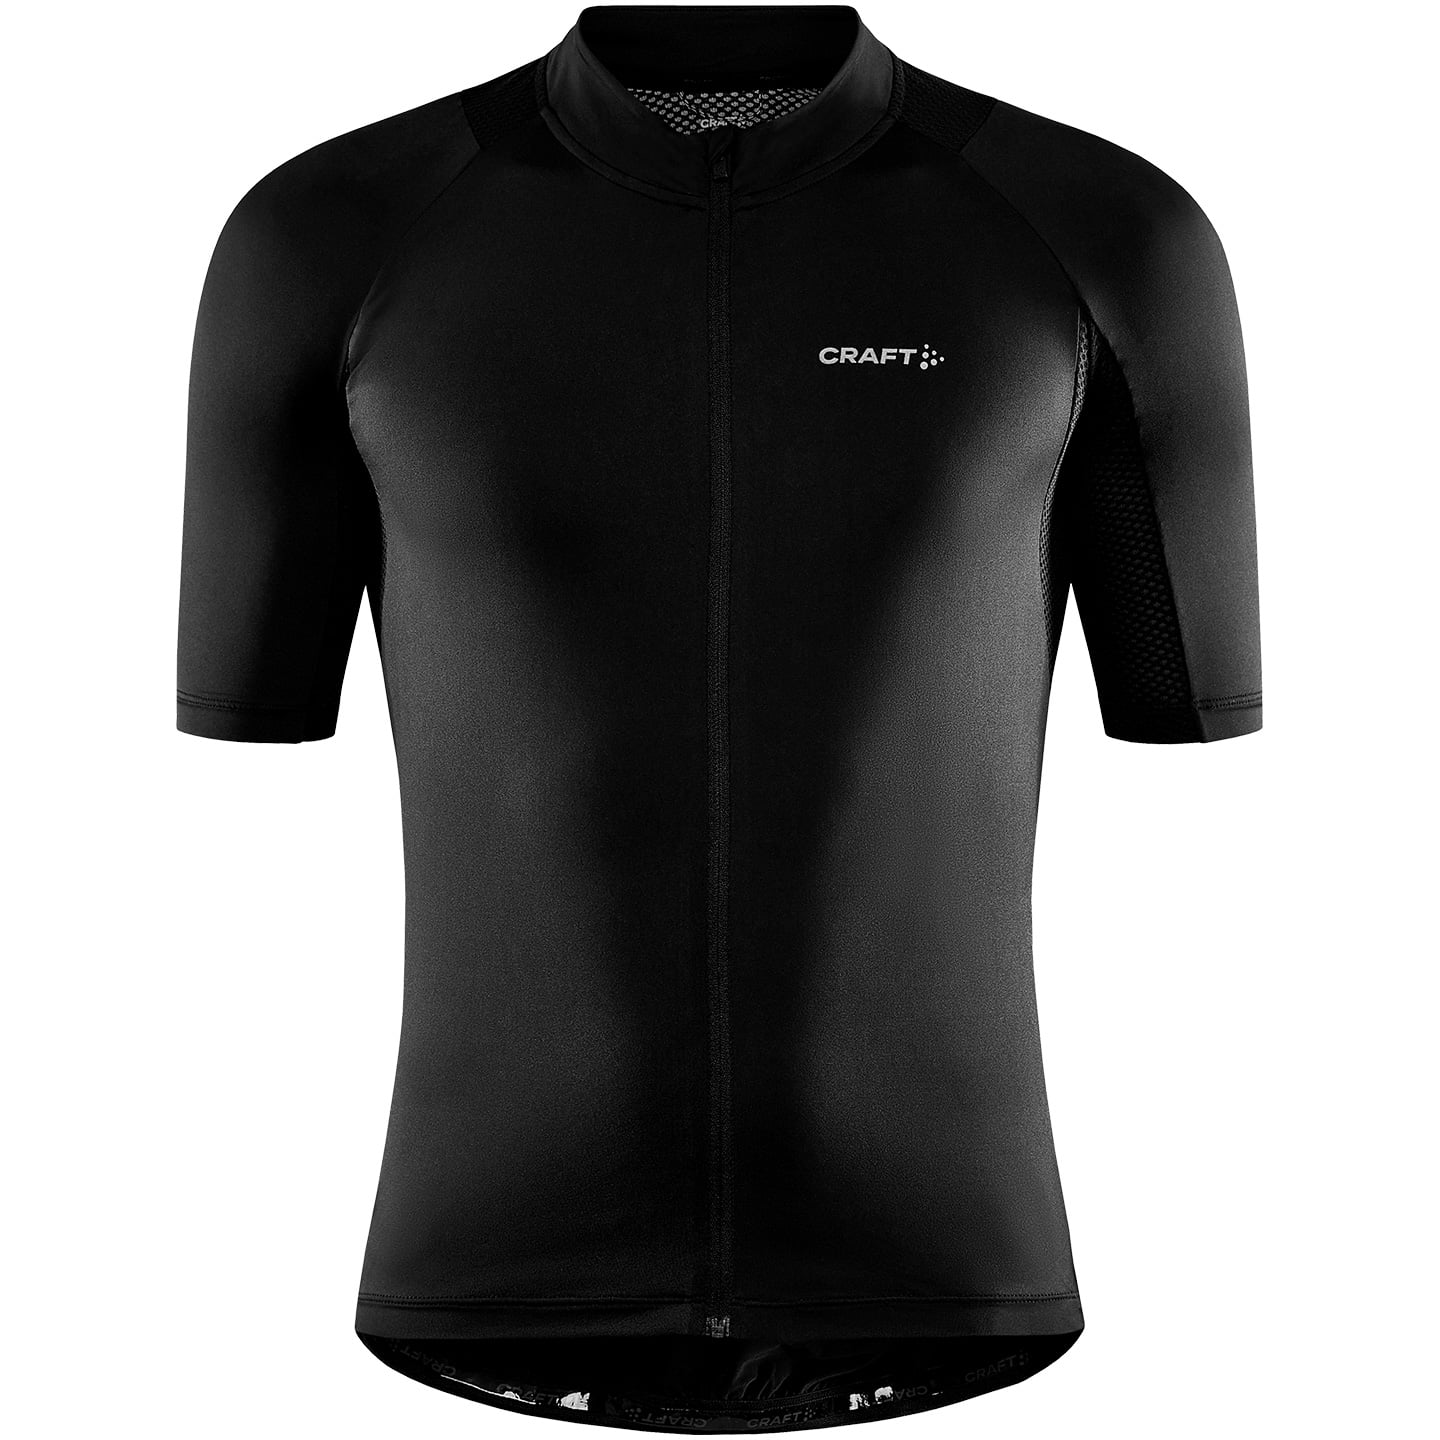 CRAFT ADV Endur Short Sleeve Jersey Short Sleeve Jersey, for men, size S, Cycling jersey, Cycling clothing